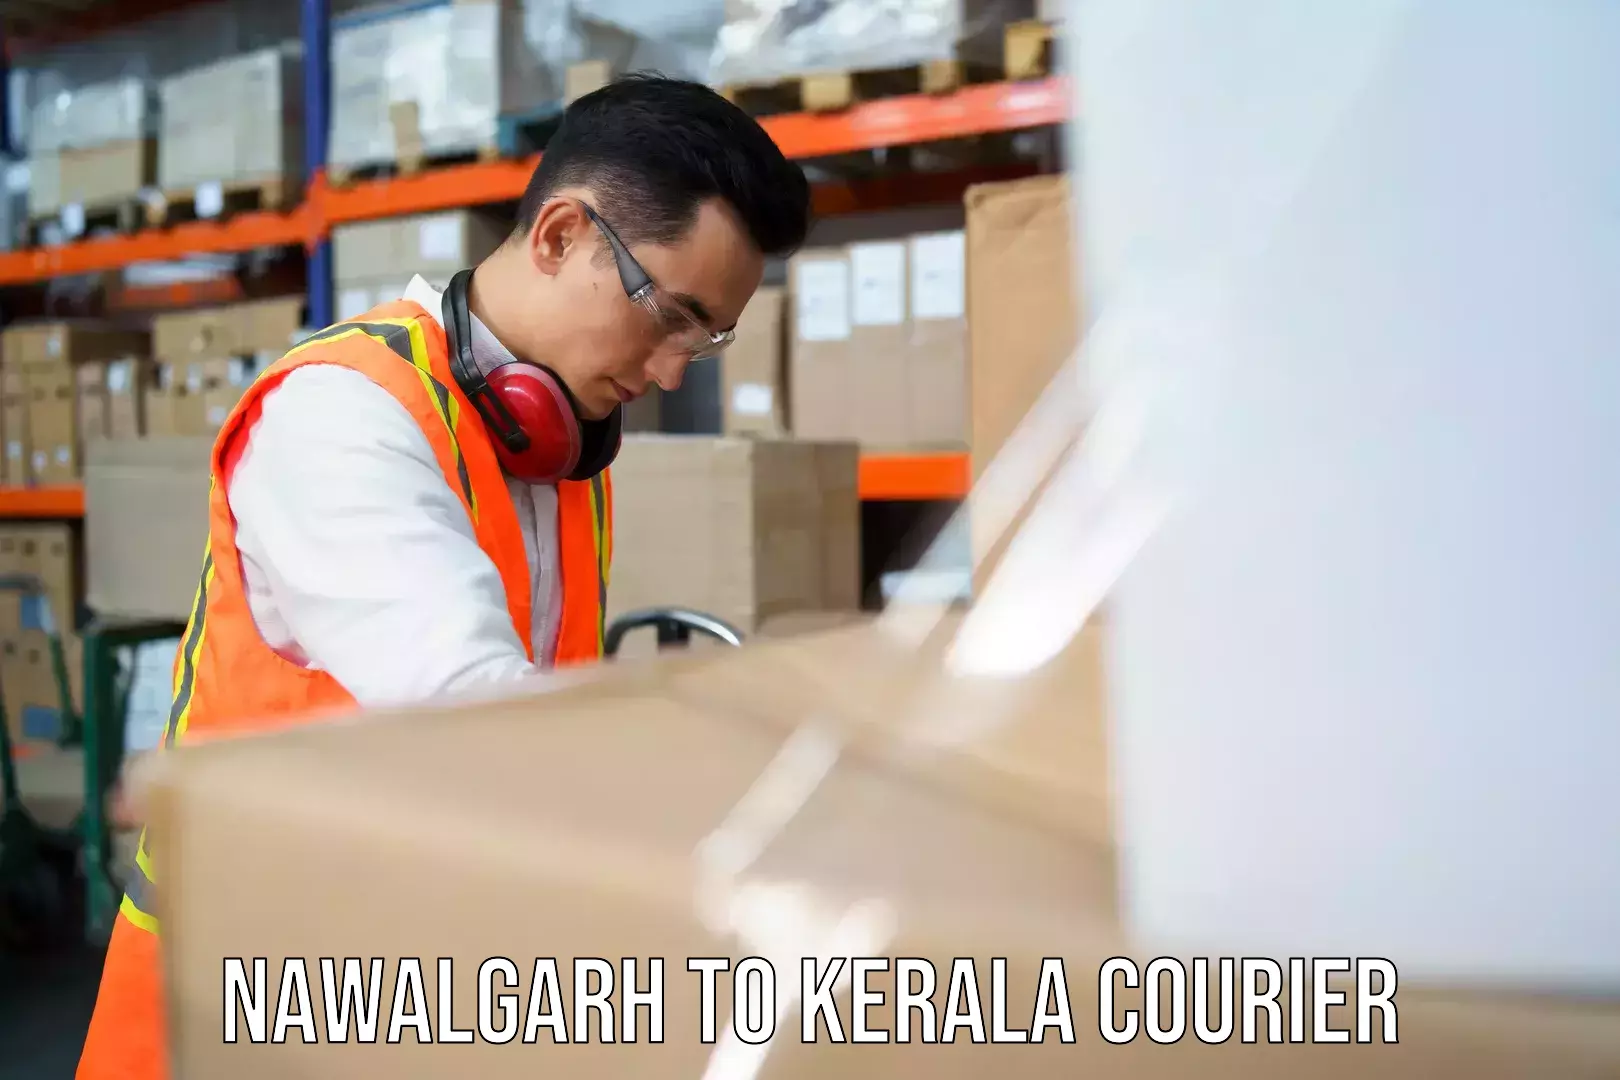 Customer-focused courier Nawalgarh to Kerala